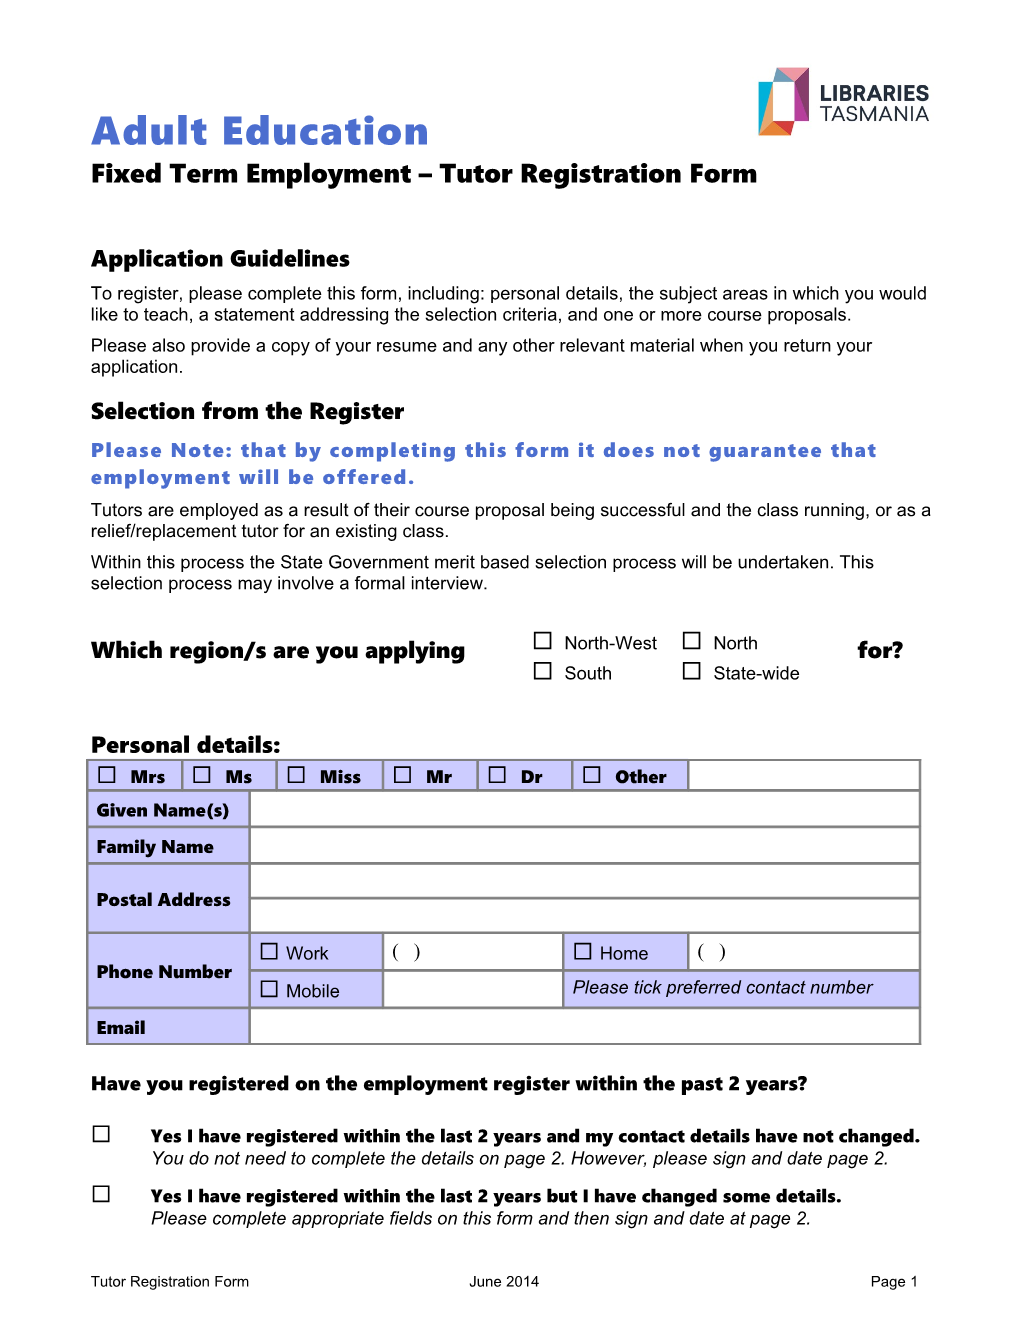 Fixed Term Employment Tutor Registration Form